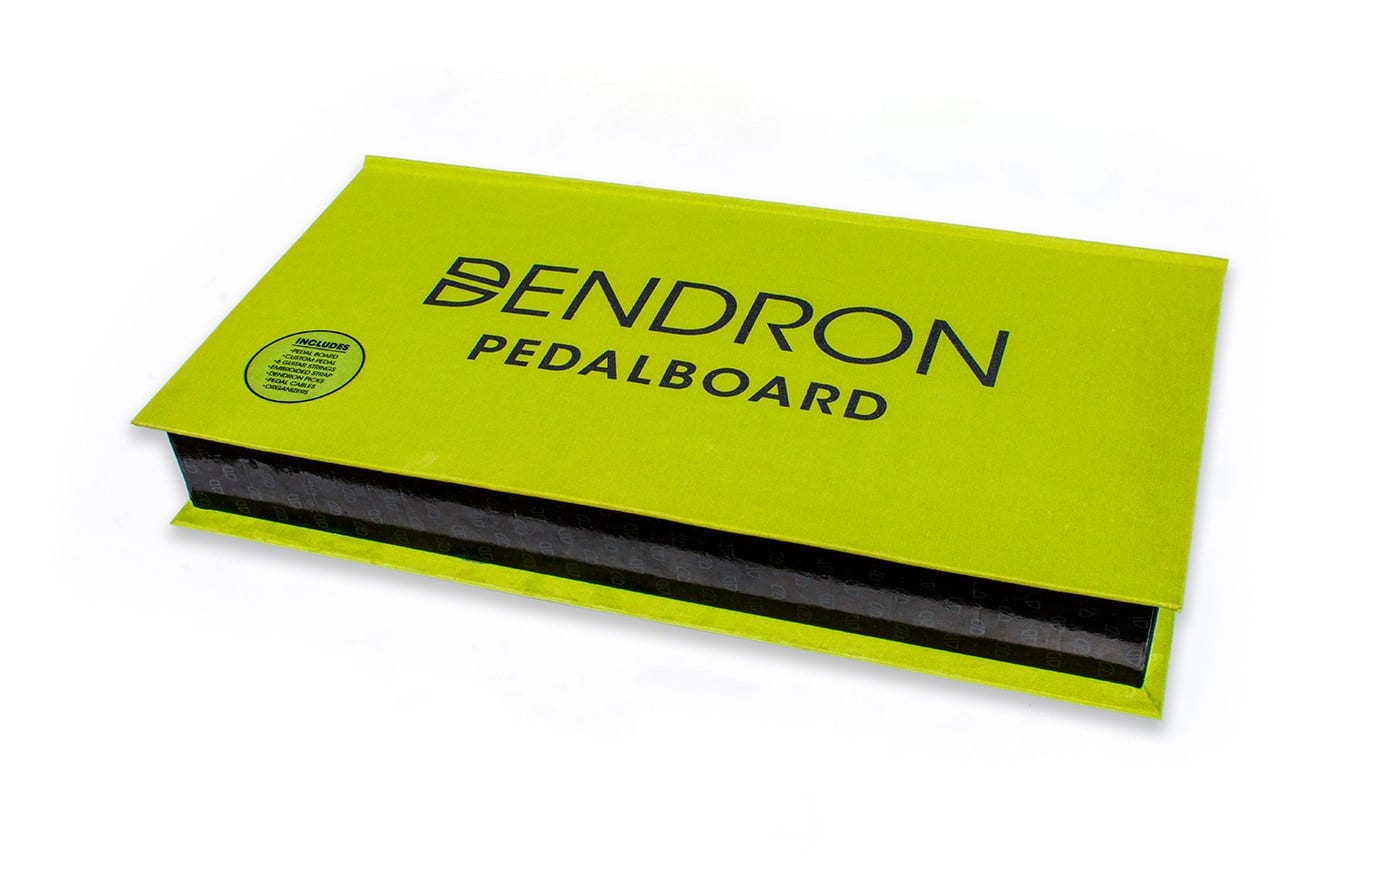 Dendron Pedal Board Kit